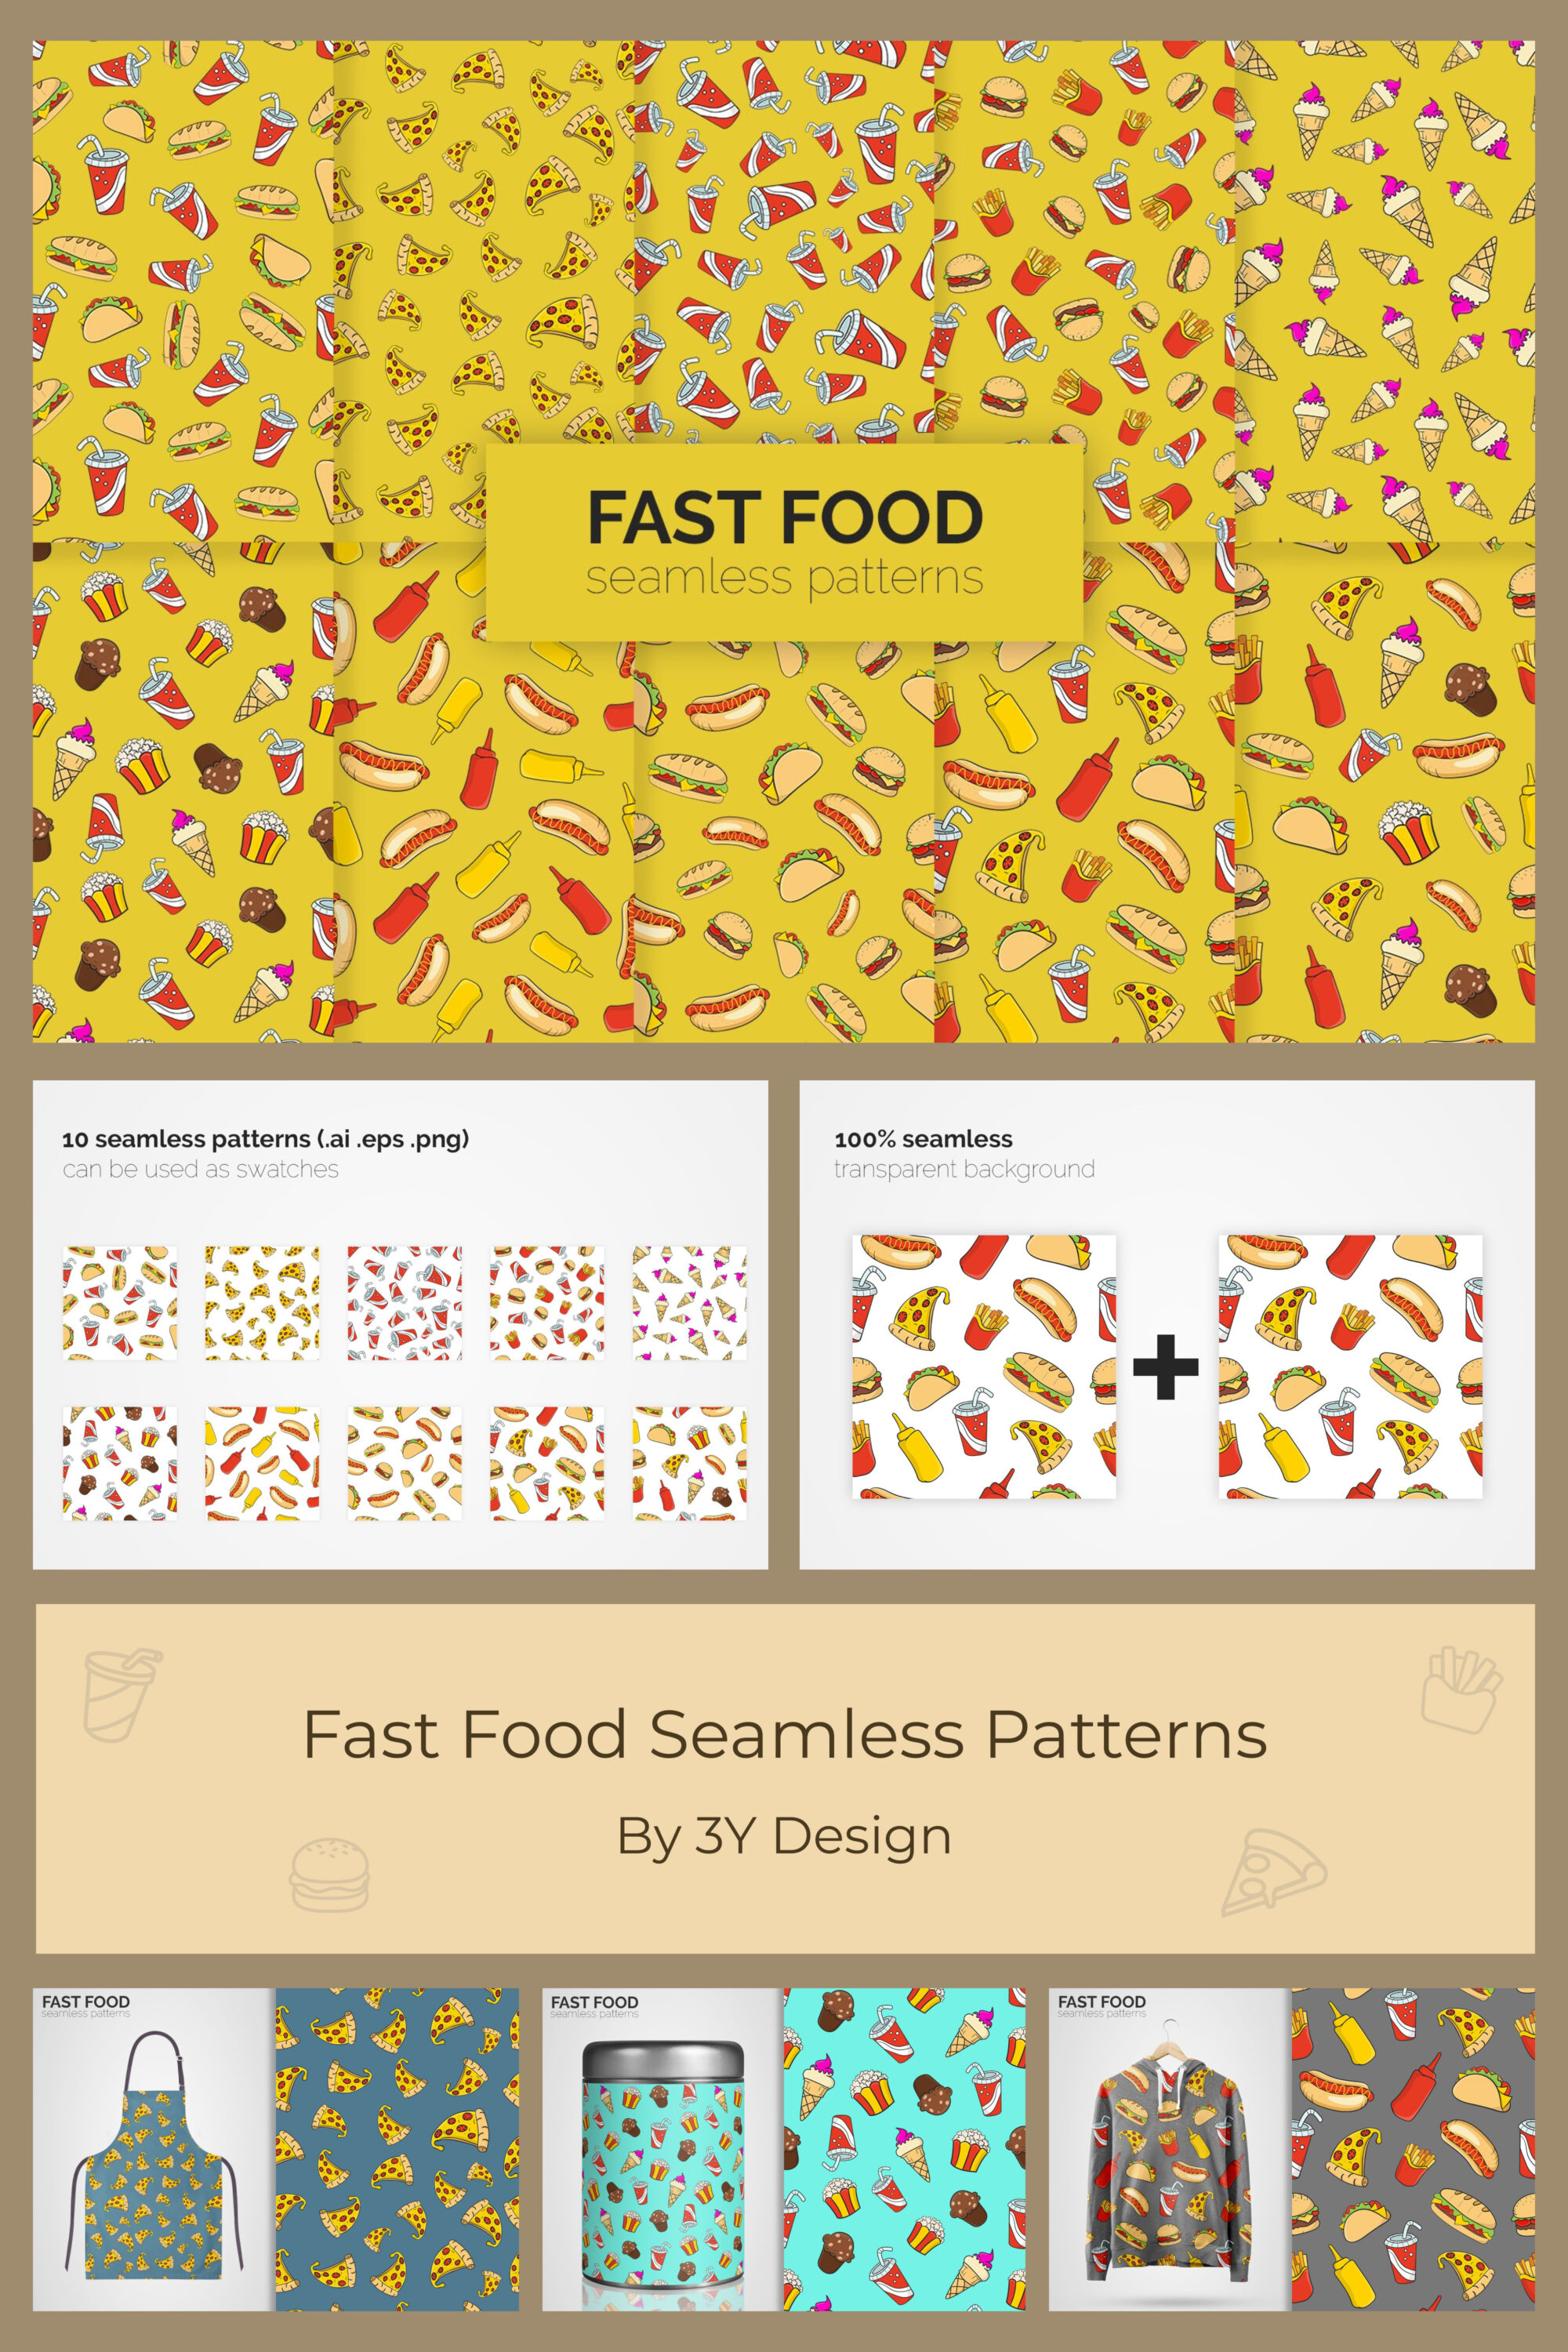 Fast food seamless patterns of pinterest.